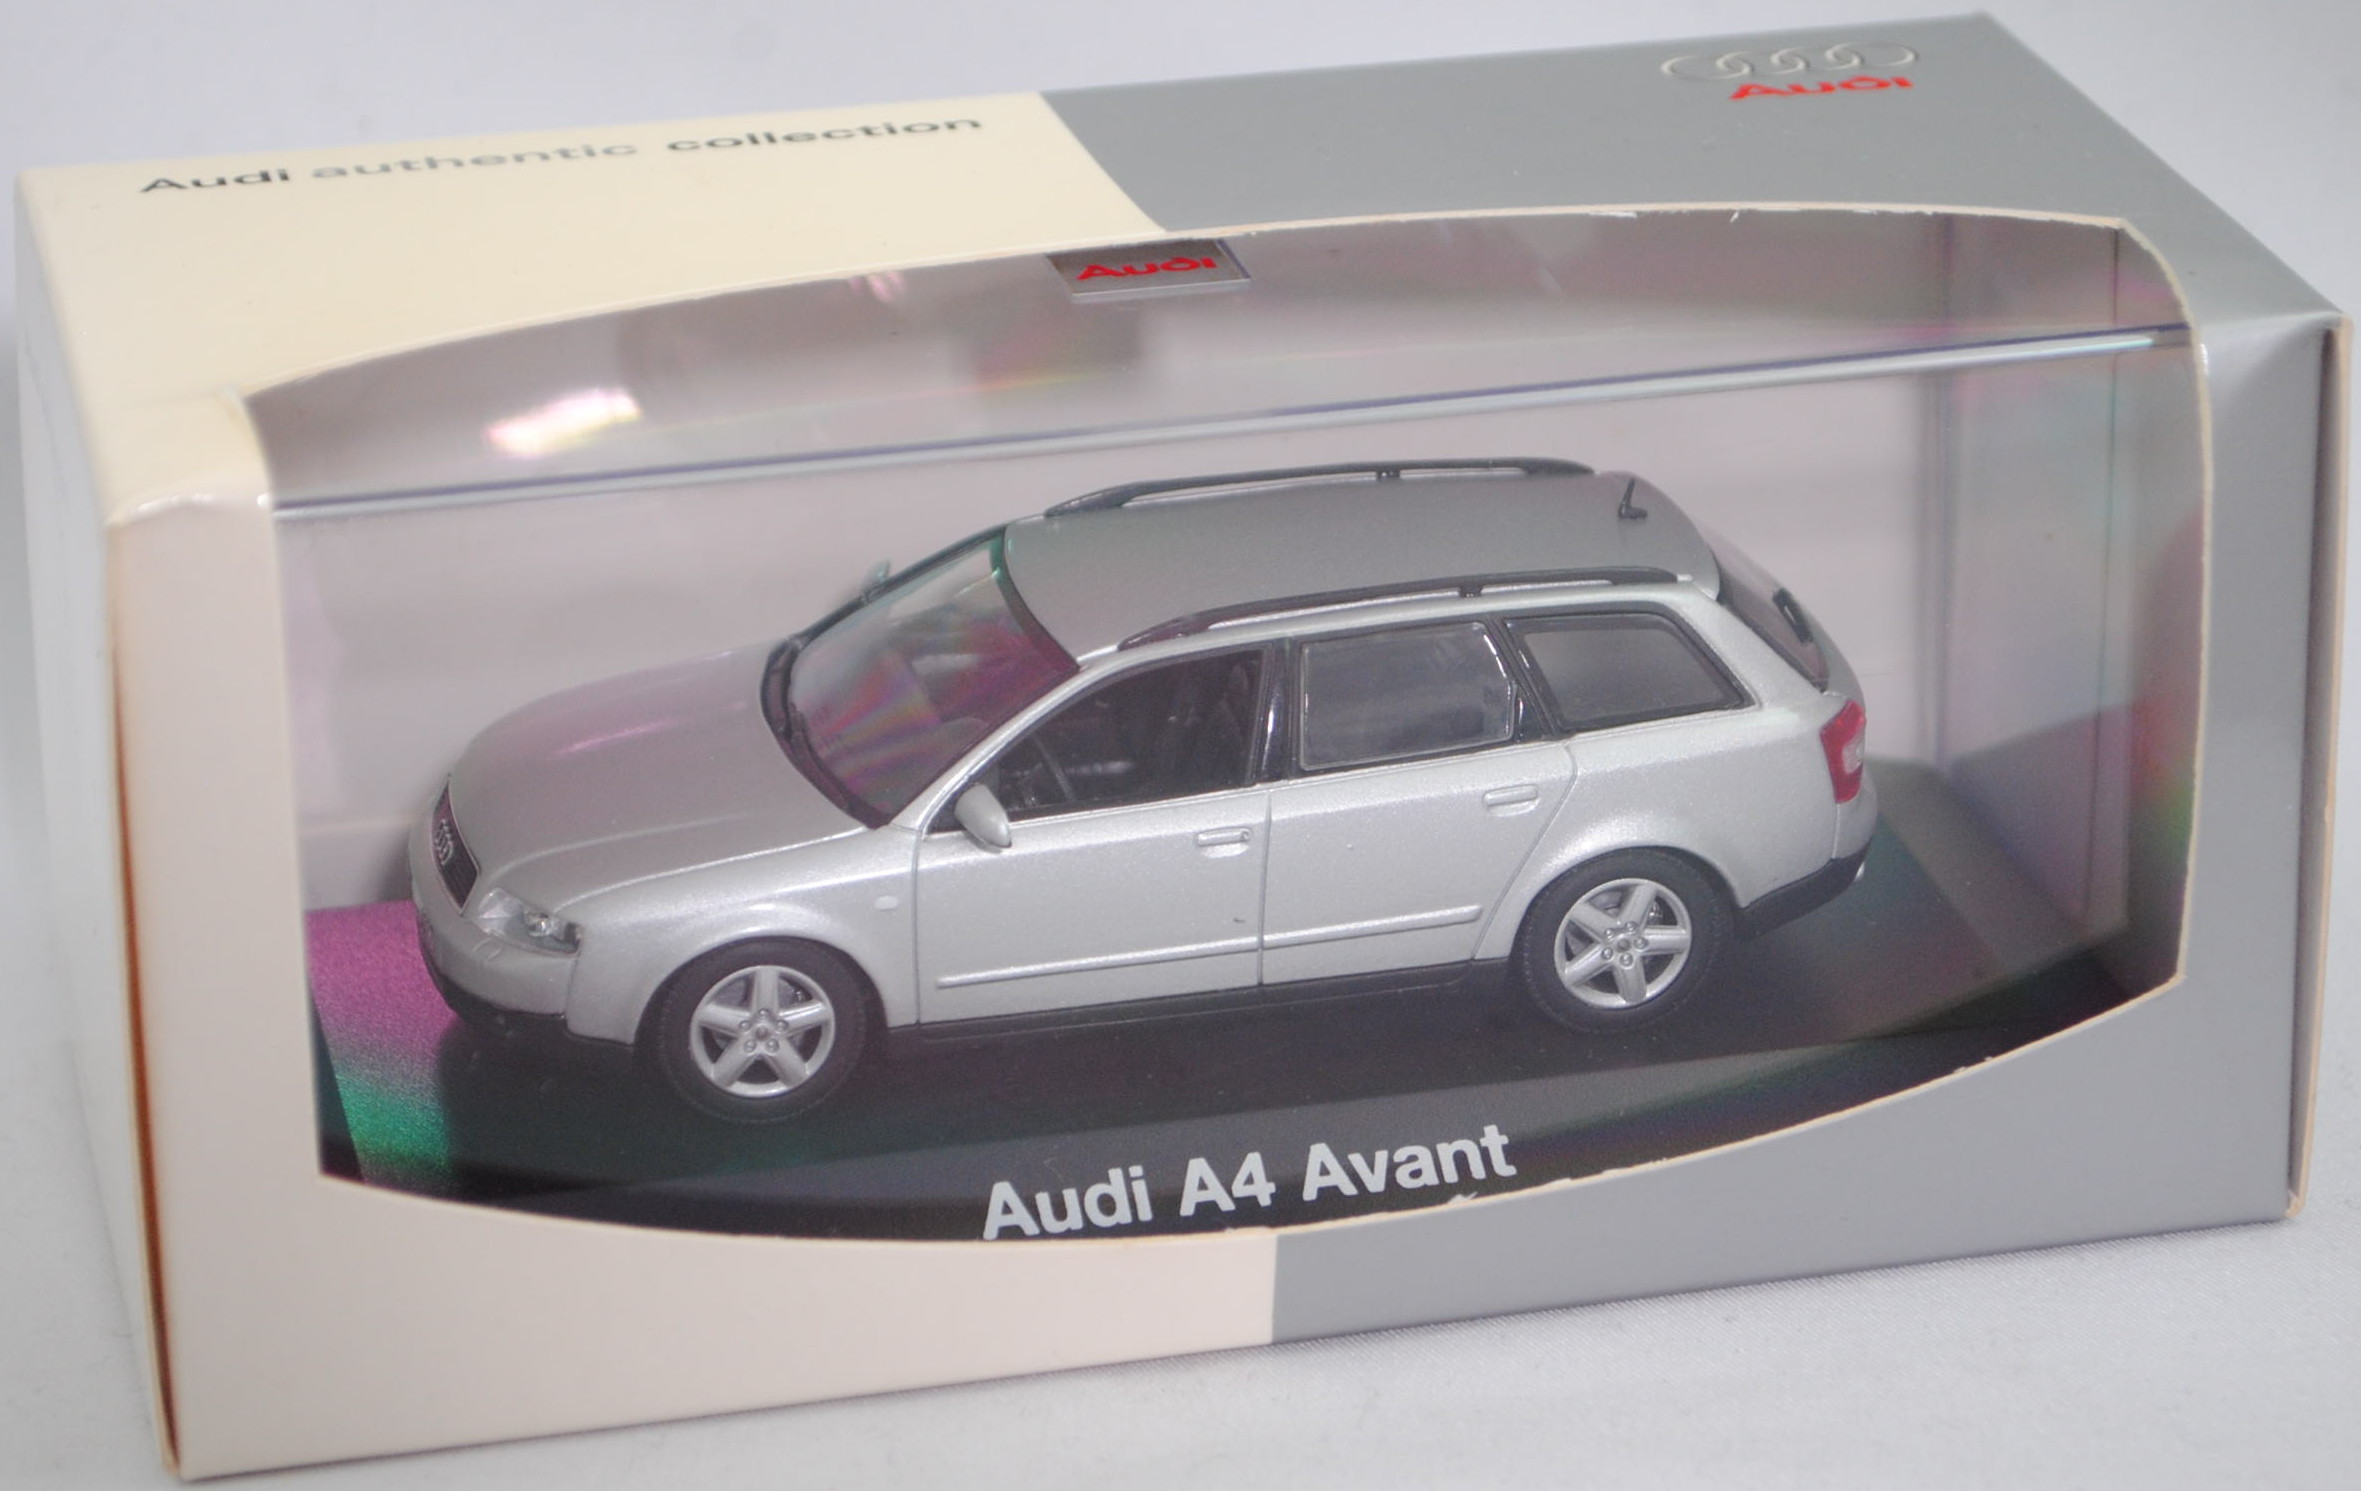 Audi A4 Avant 3.0 quattro (2. Gen. A4, B6, Modell 01-04), lichtsilber  metallic, Minichamps, 1:43, mb